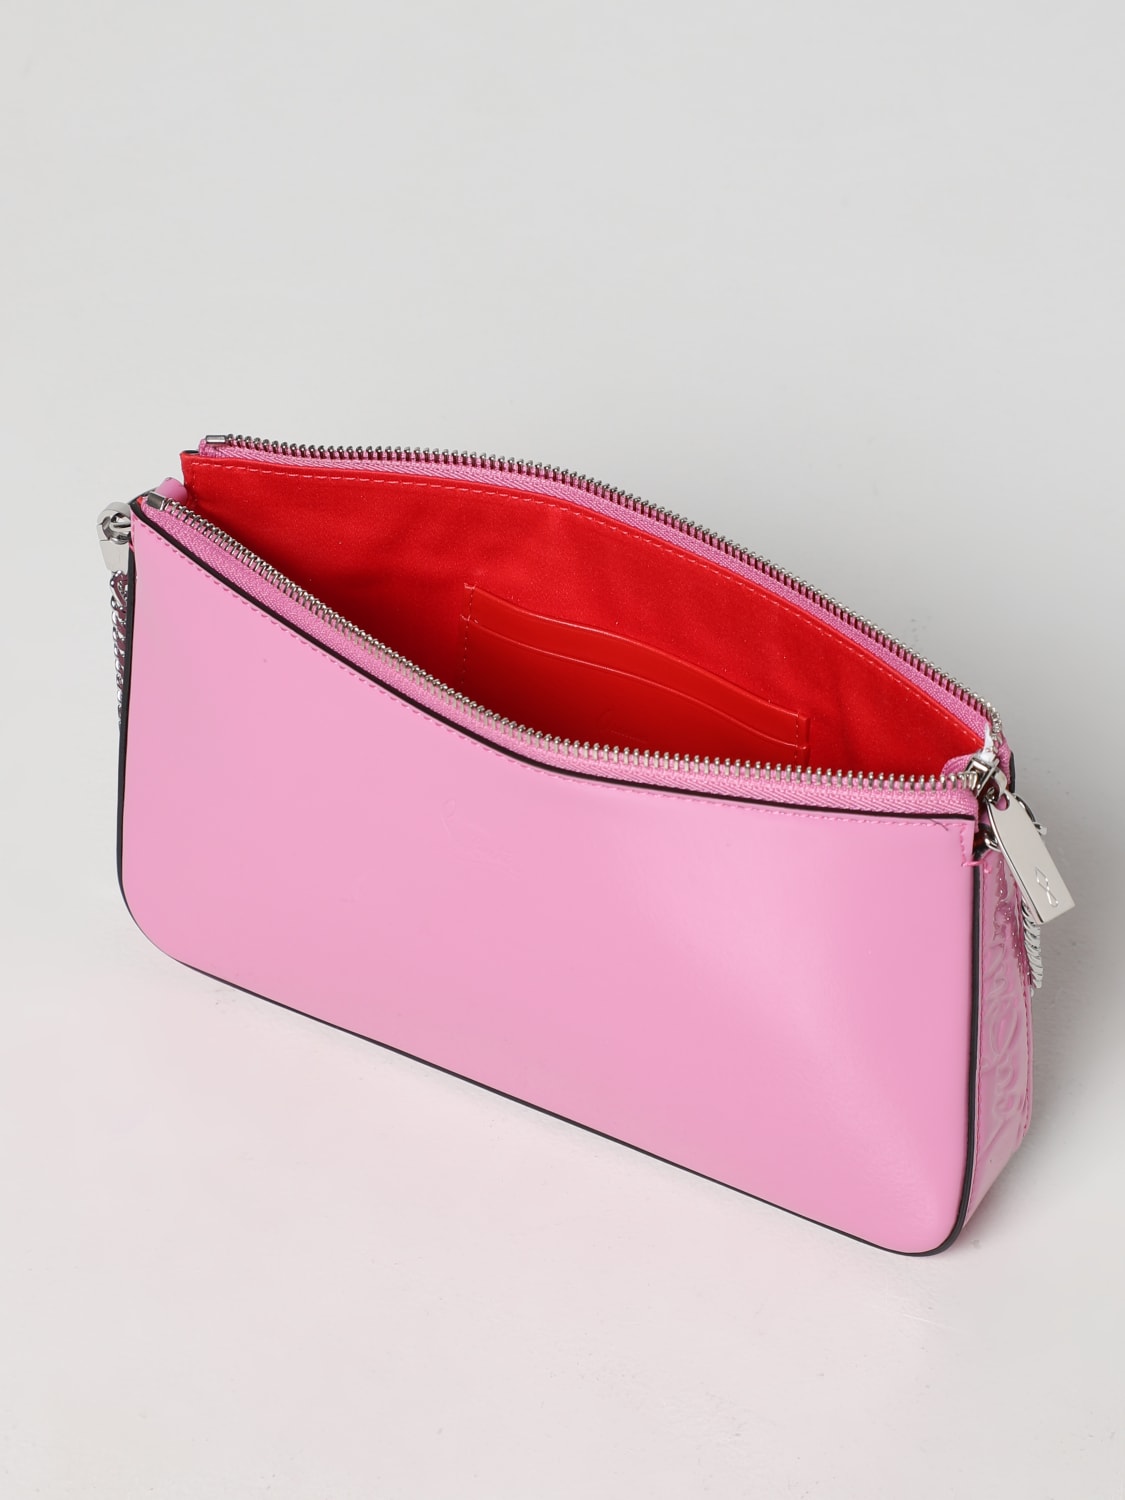 Christian Louboutin, Loubila pink patent pouch